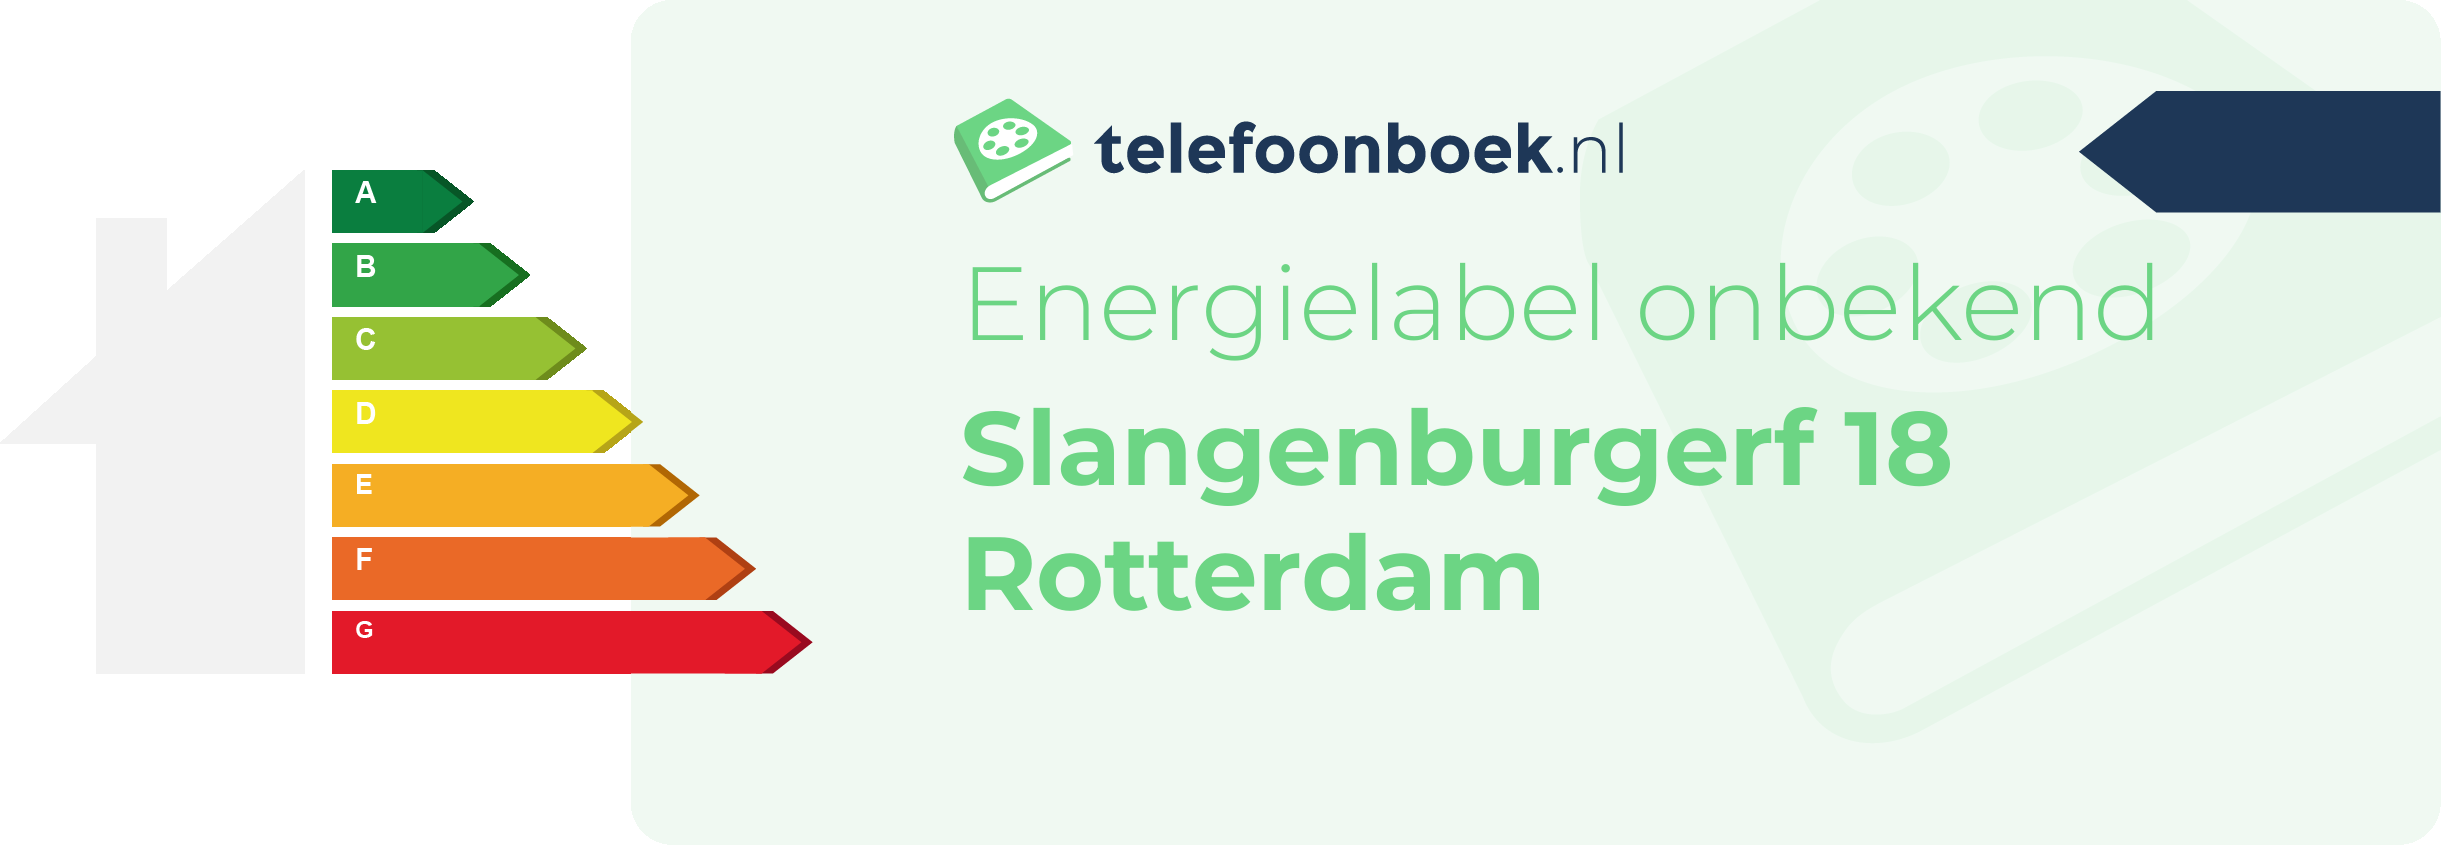 Energielabel Slangenburgerf 18 Rotterdam